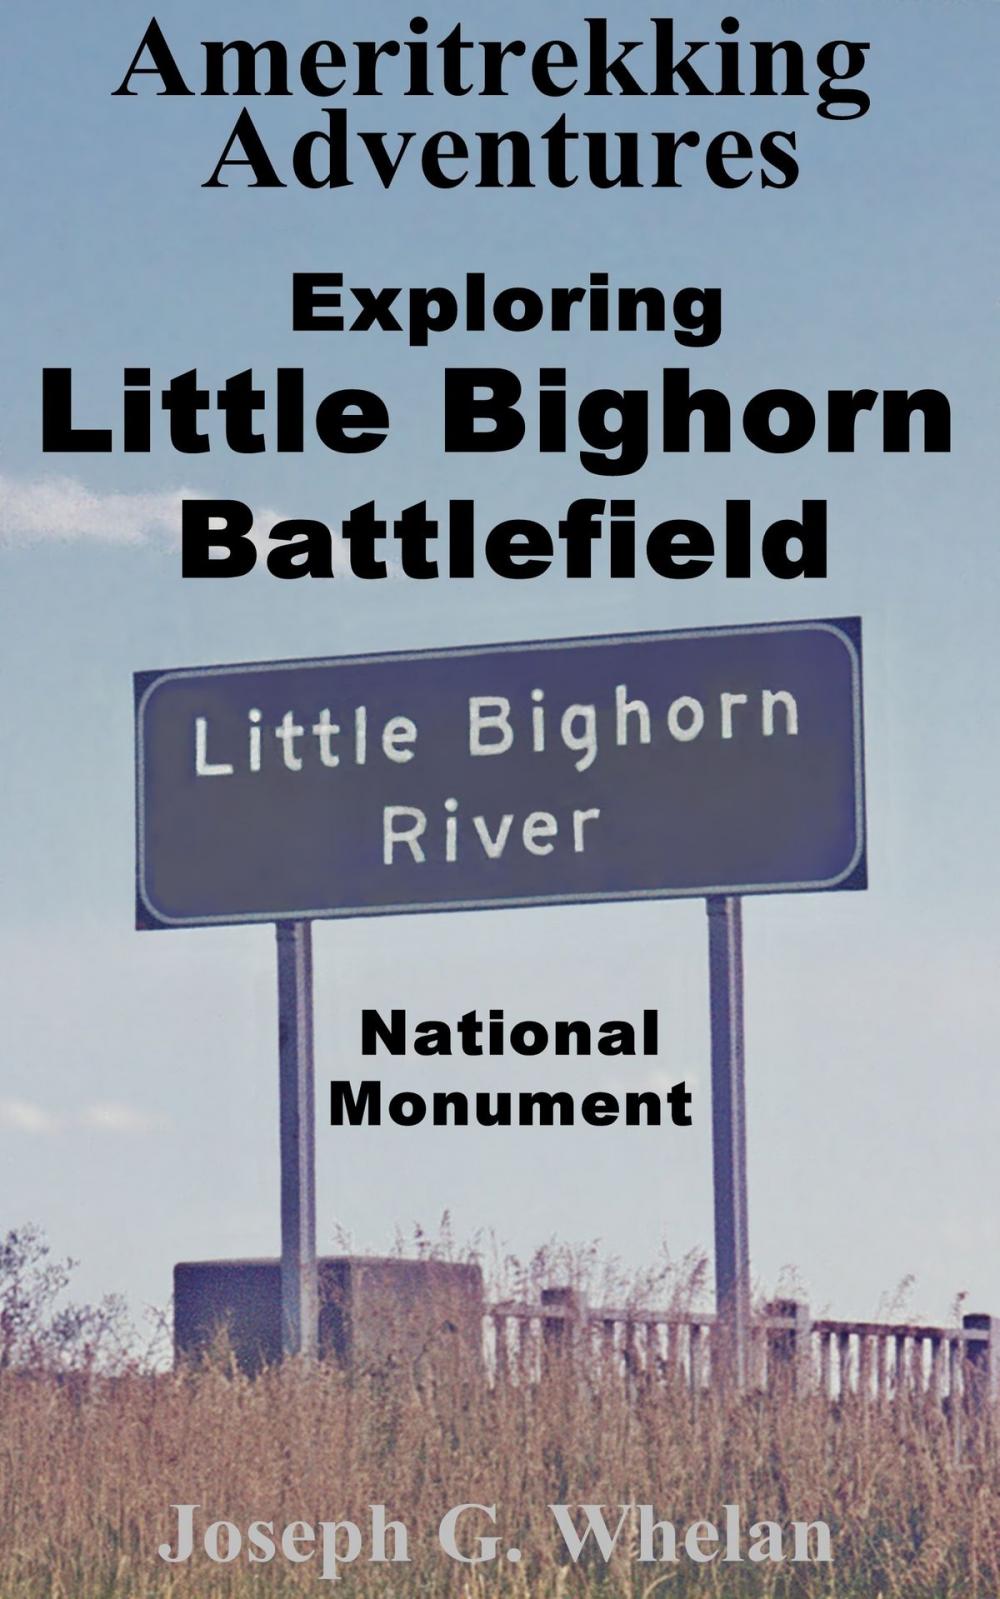 Big bigCover of Ameritrekking Adventures: Exploring Little Bighorn Battlefield National Monument